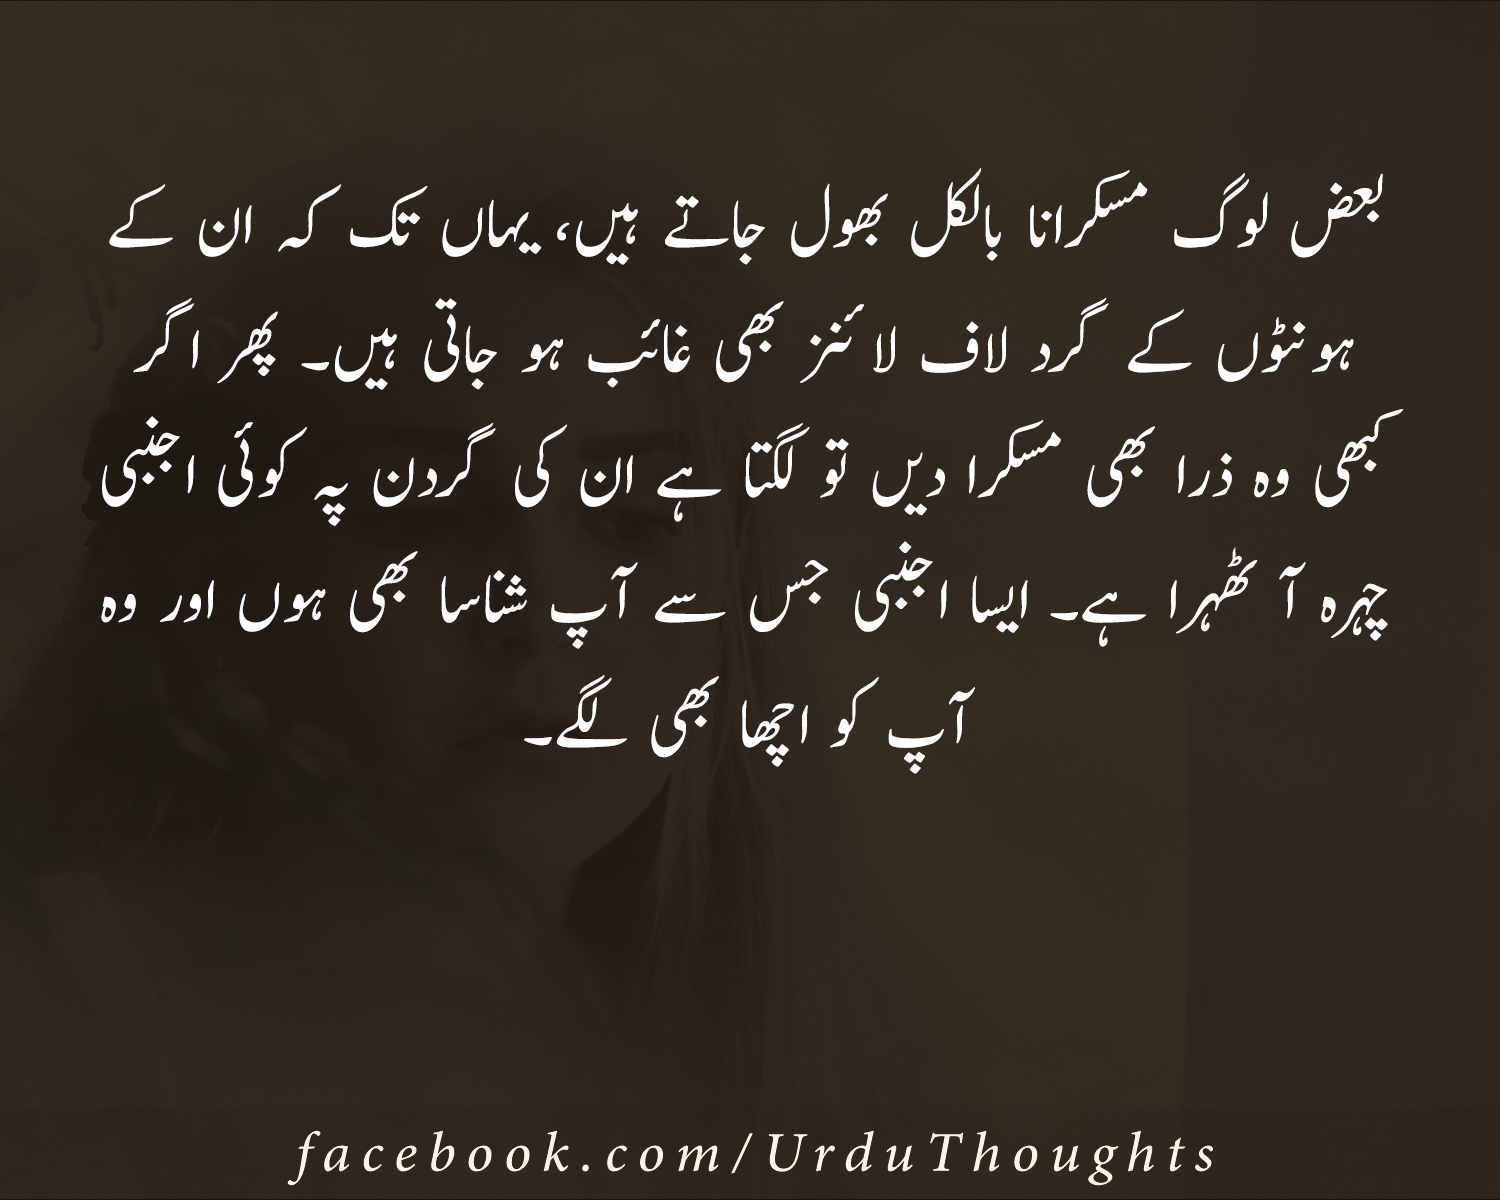 10 Urdu  Quotes  Images About Zindagi Success and People 